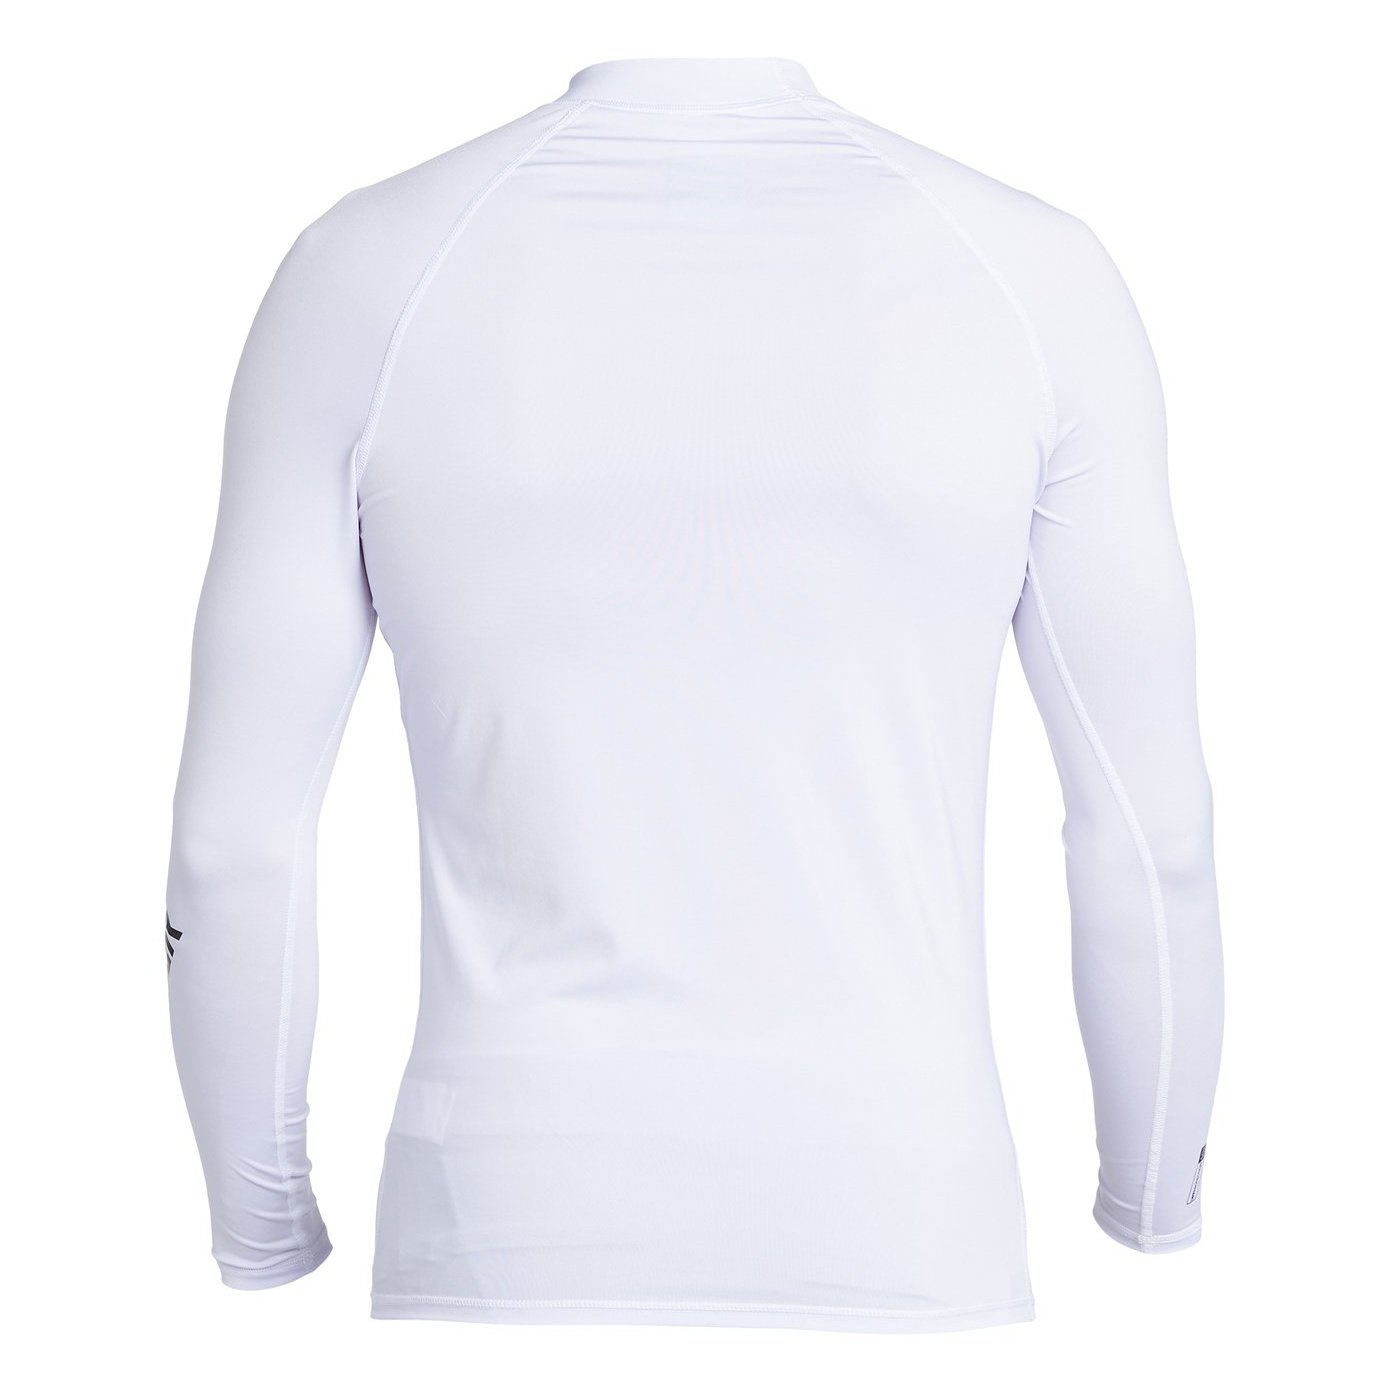 Quiksilver All Time - Long Sleeve UPF 50 Rash Vest for Men - Sporty Pro